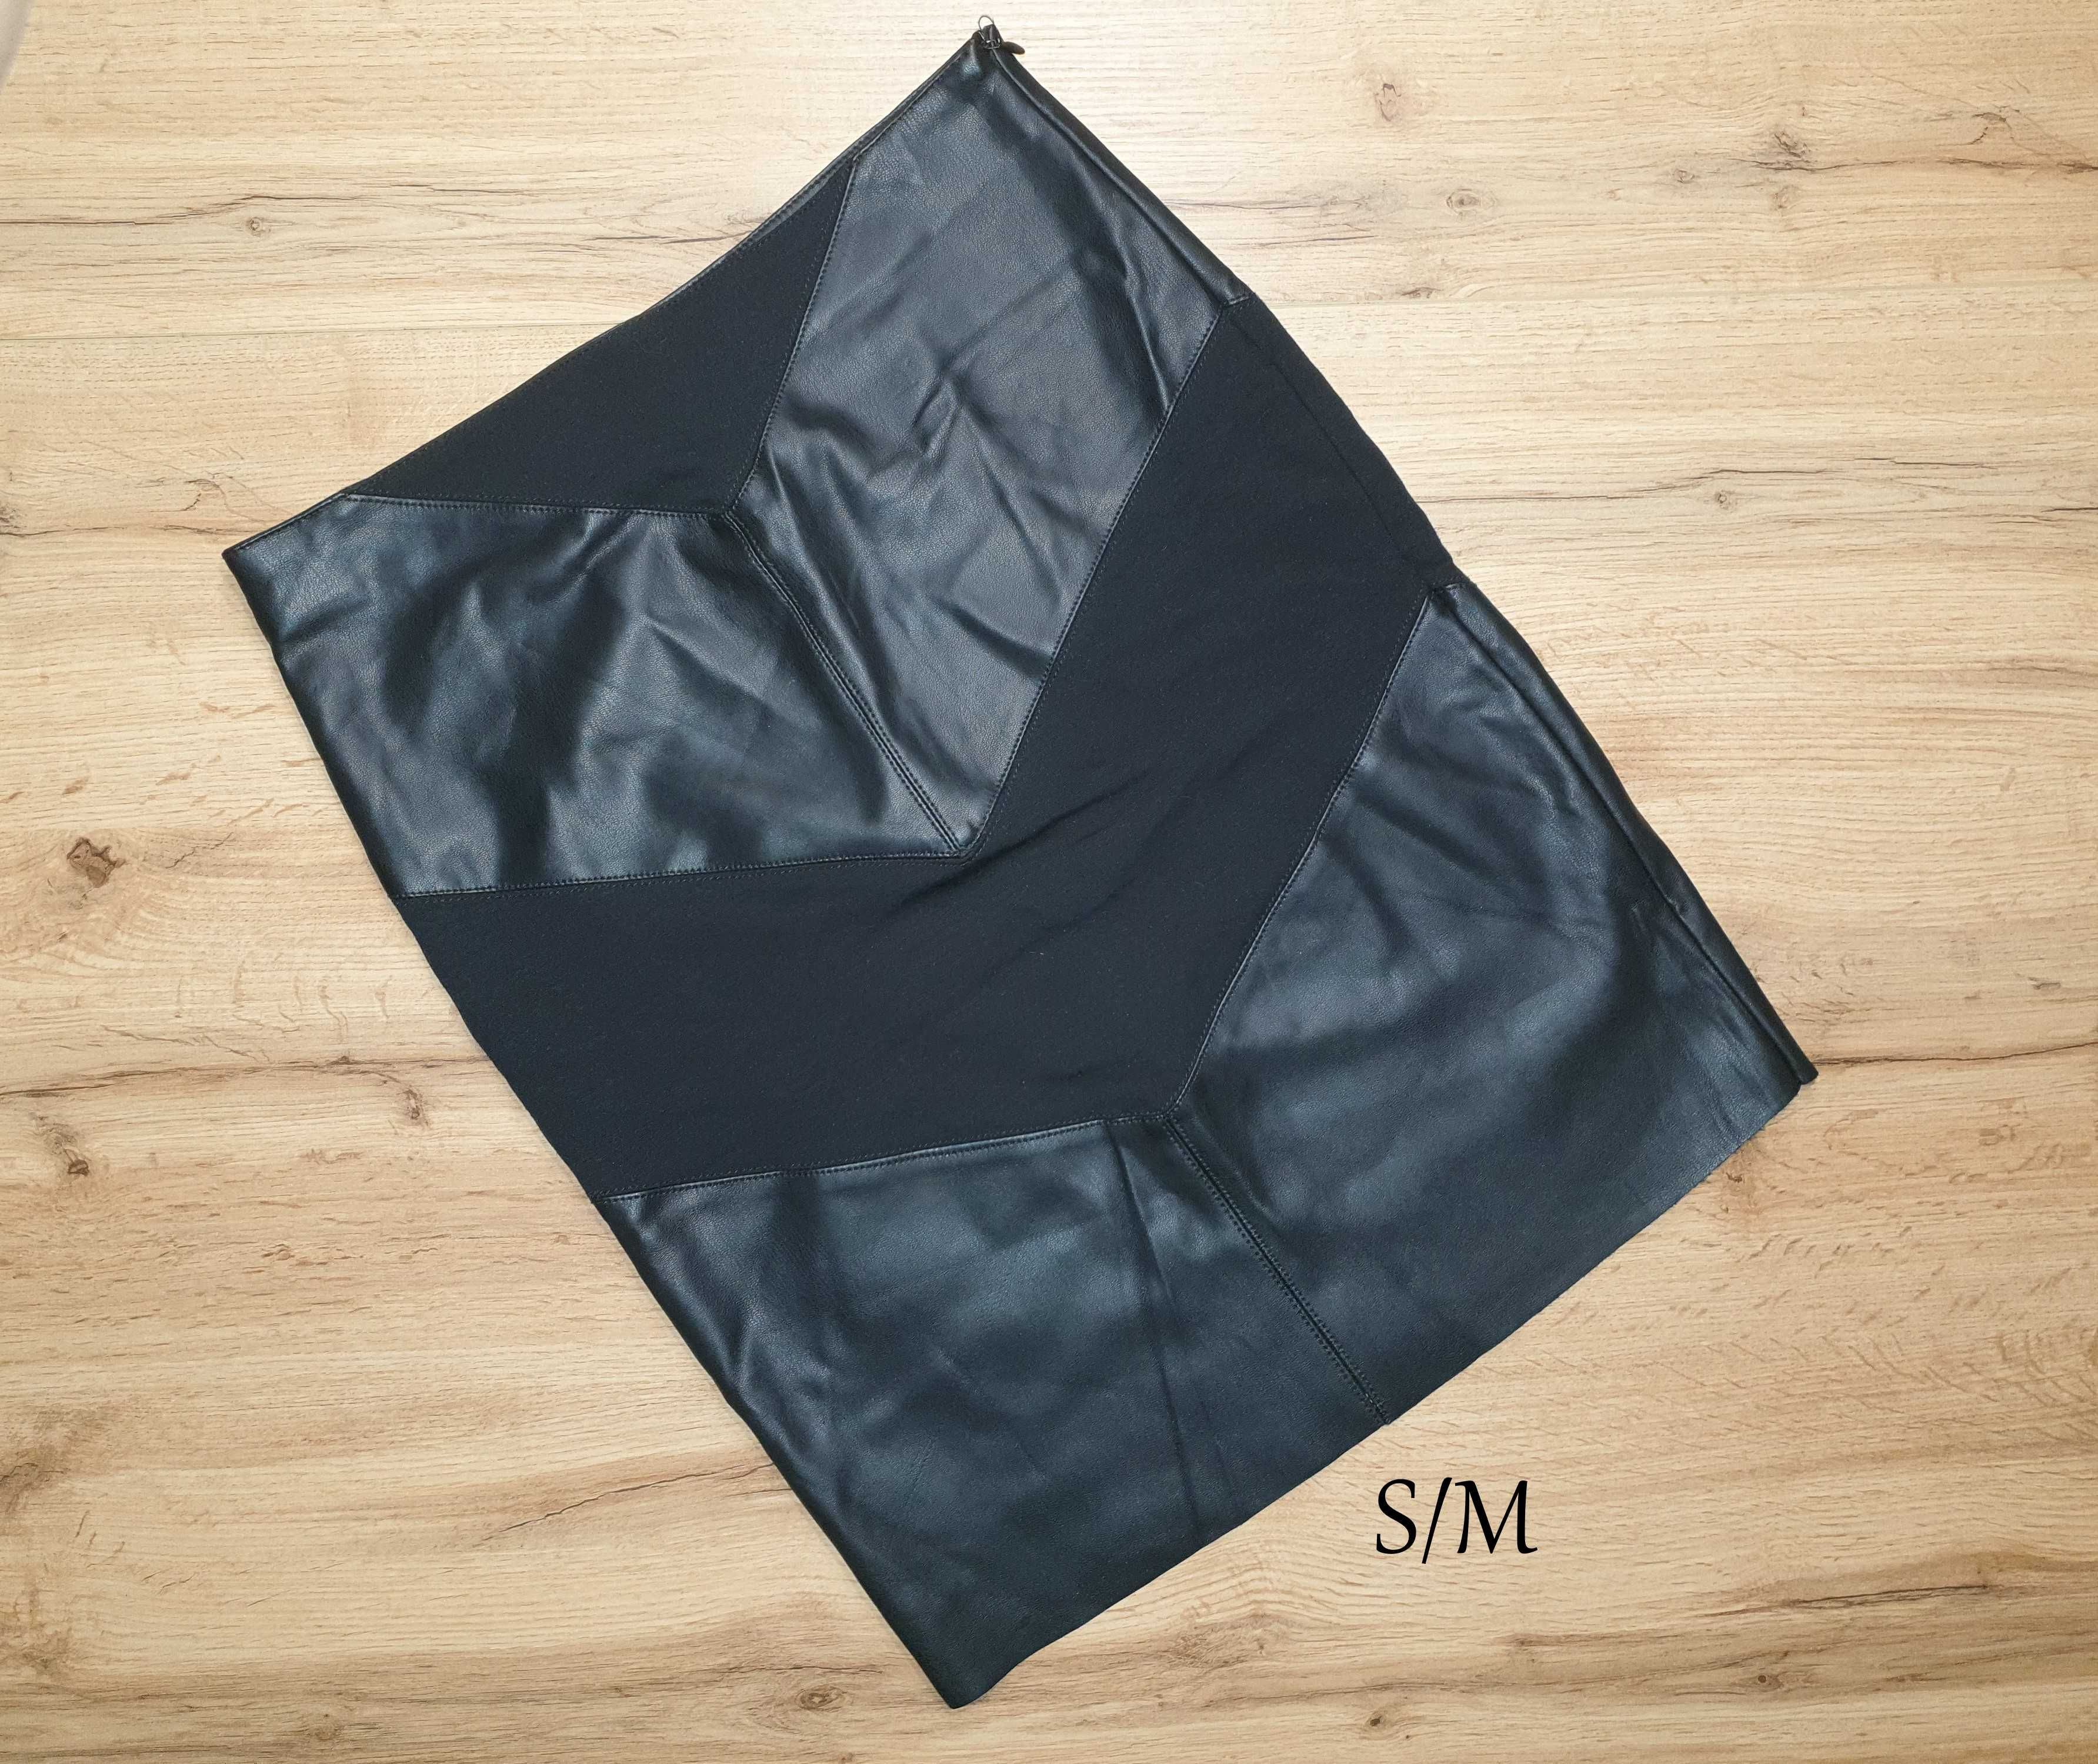 Czarna spódnica z ekoskóry, ONLY, S/M